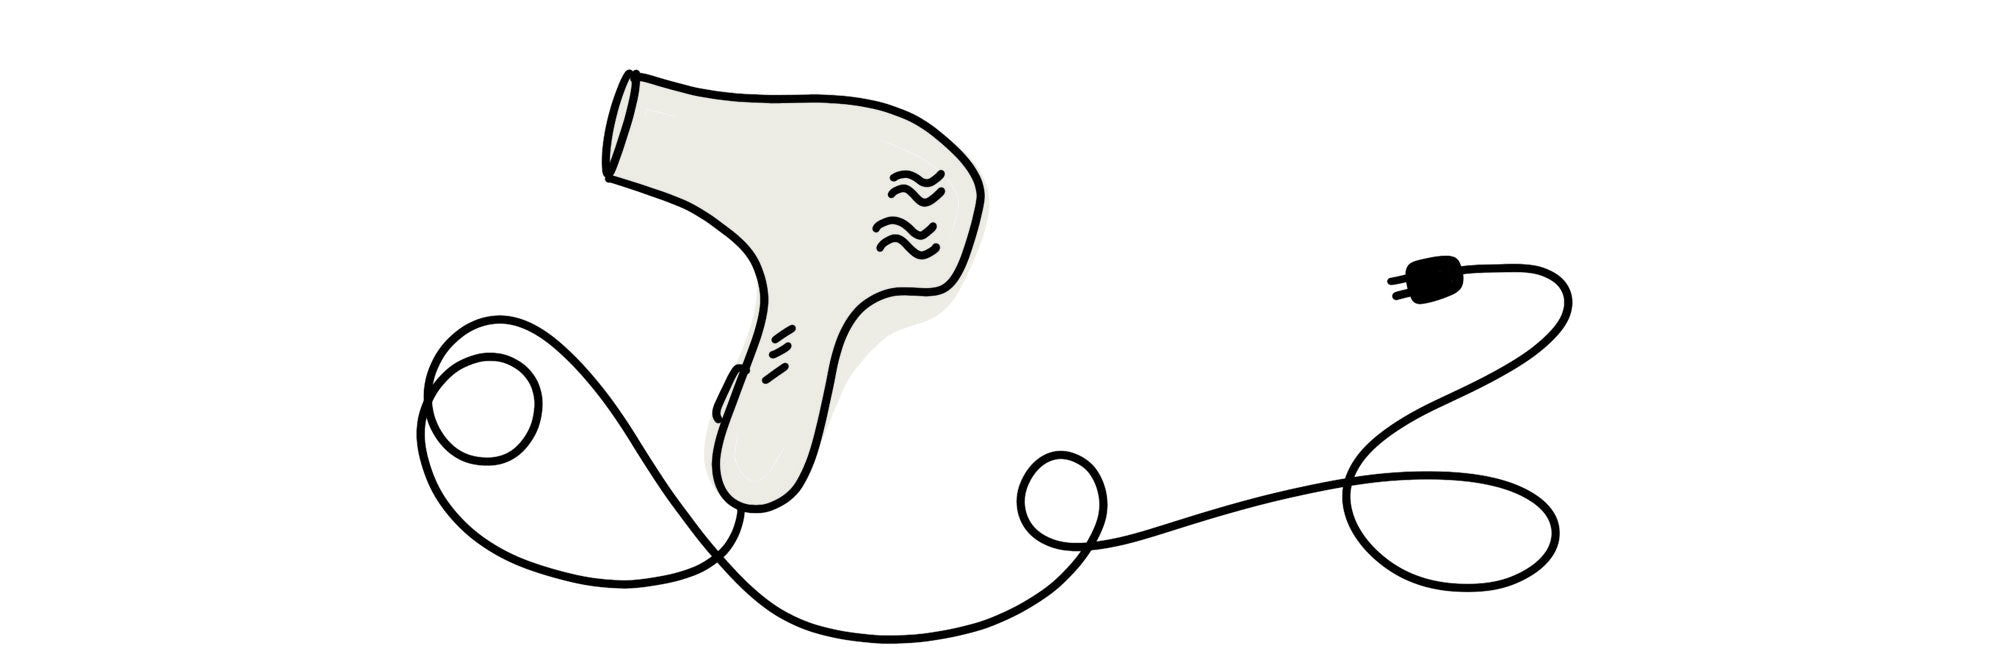 illustration of hairdryer